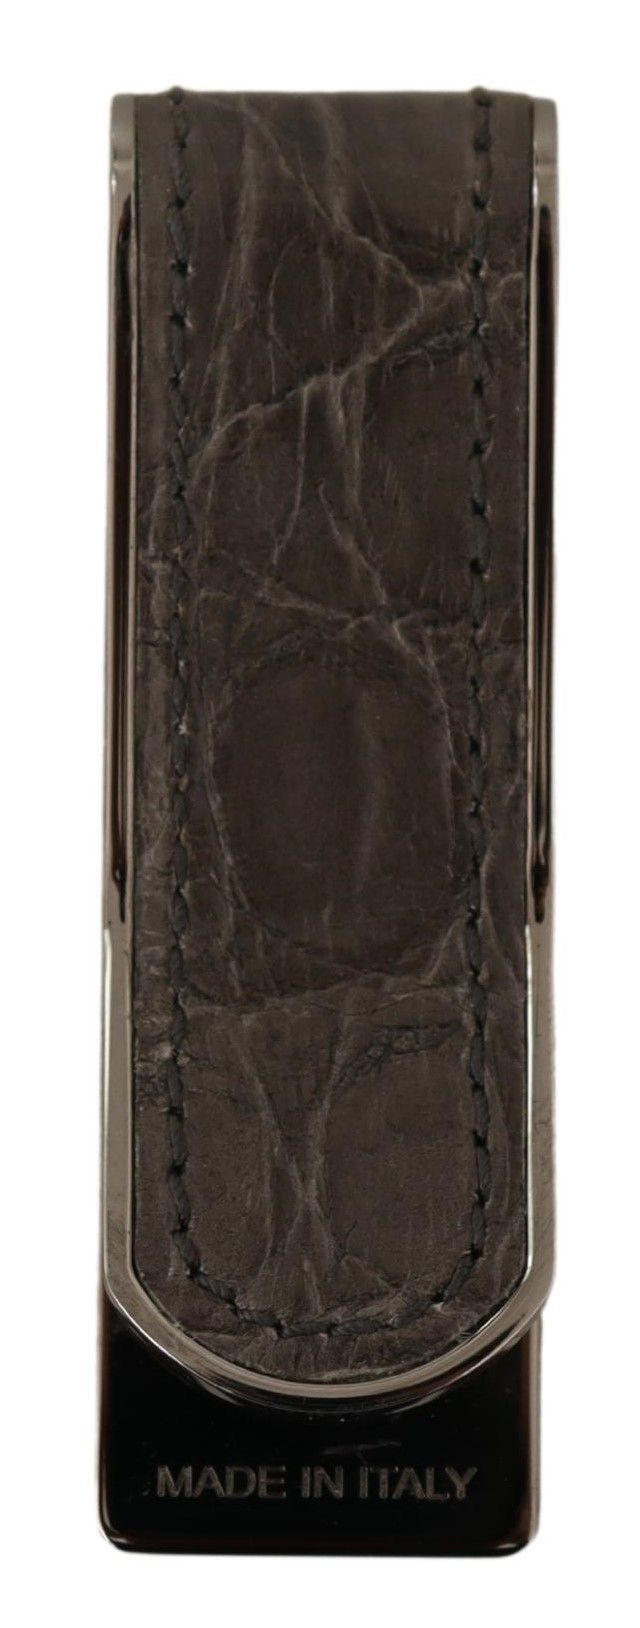 Elegant Leather Money Bar Clip